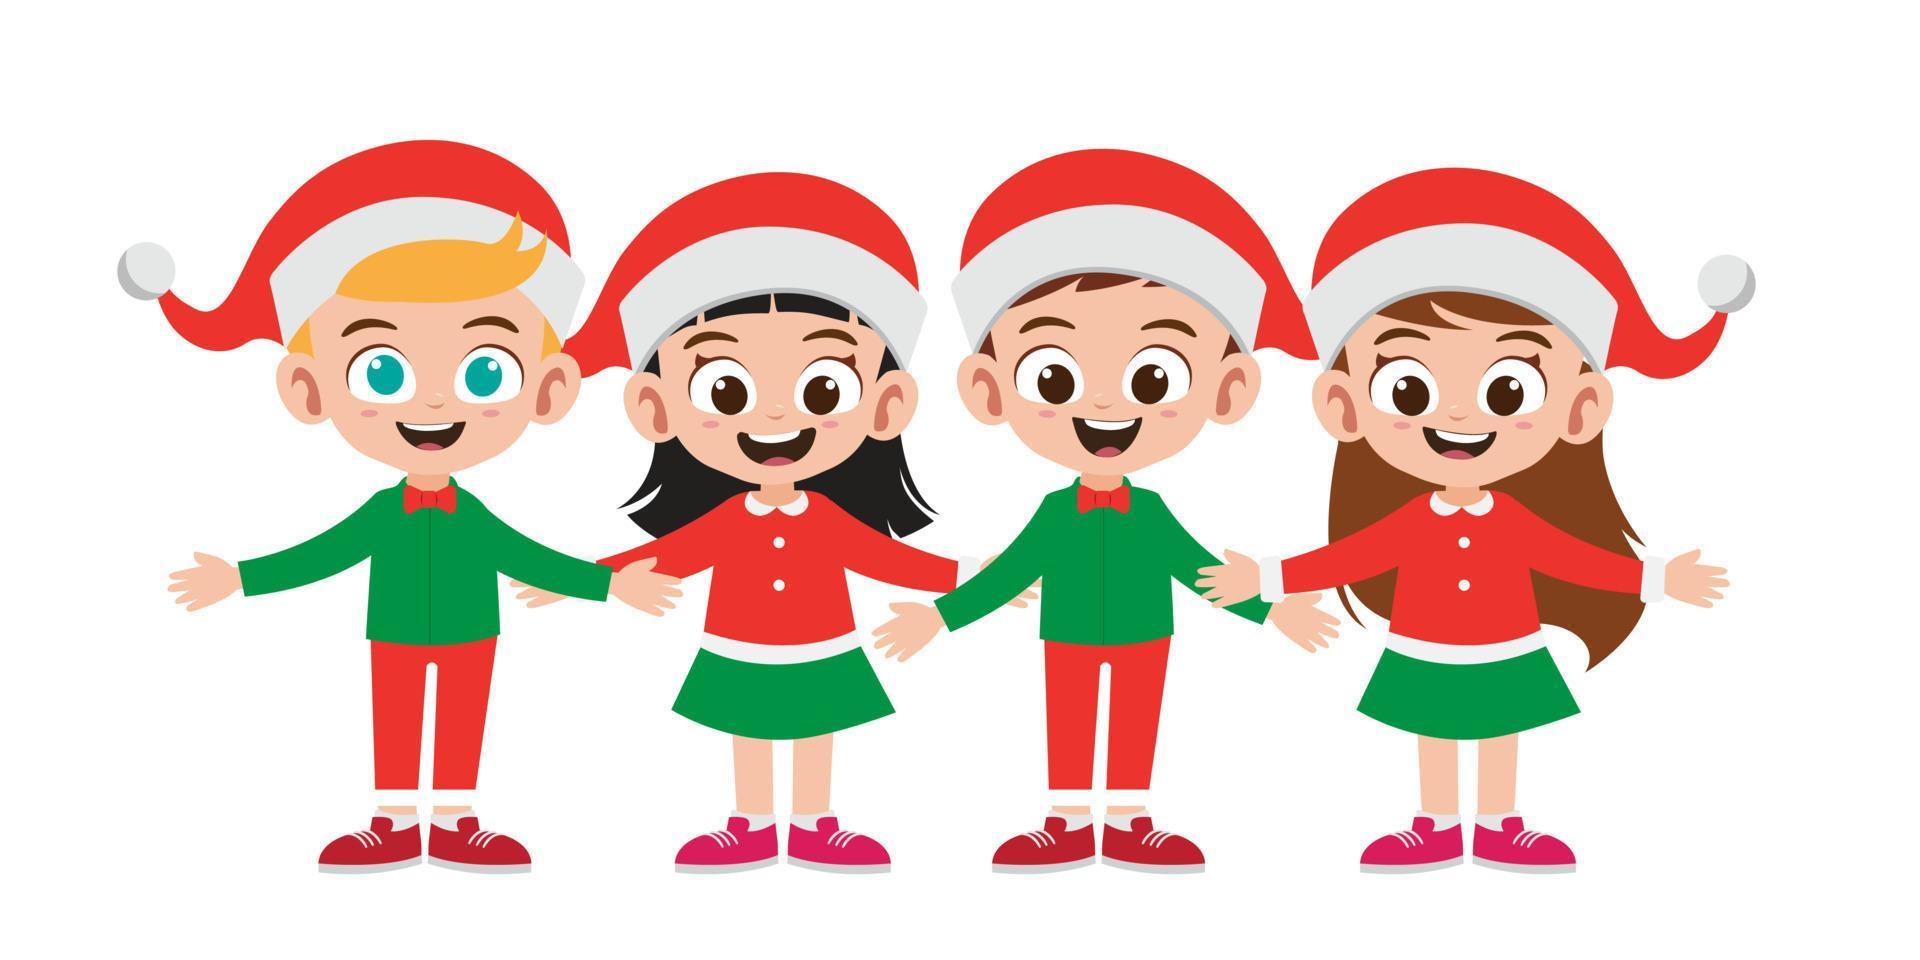 Happy kids boy and girl smile wearing Christmas costume vector illustration set